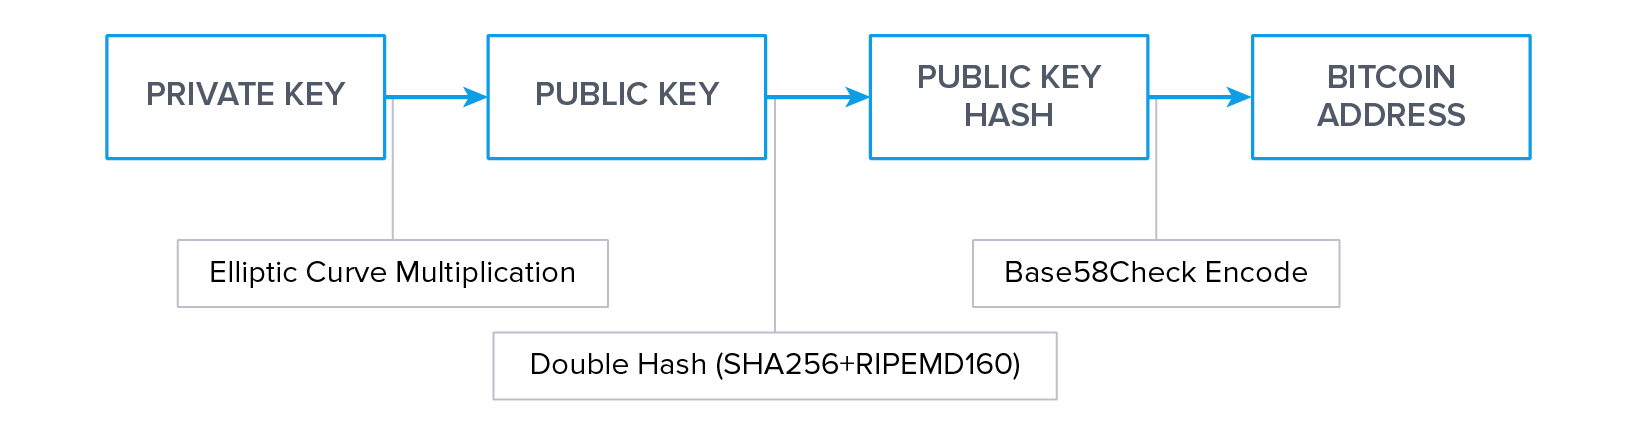 Bitcoin generate public key from private key 0.00114481 btc value